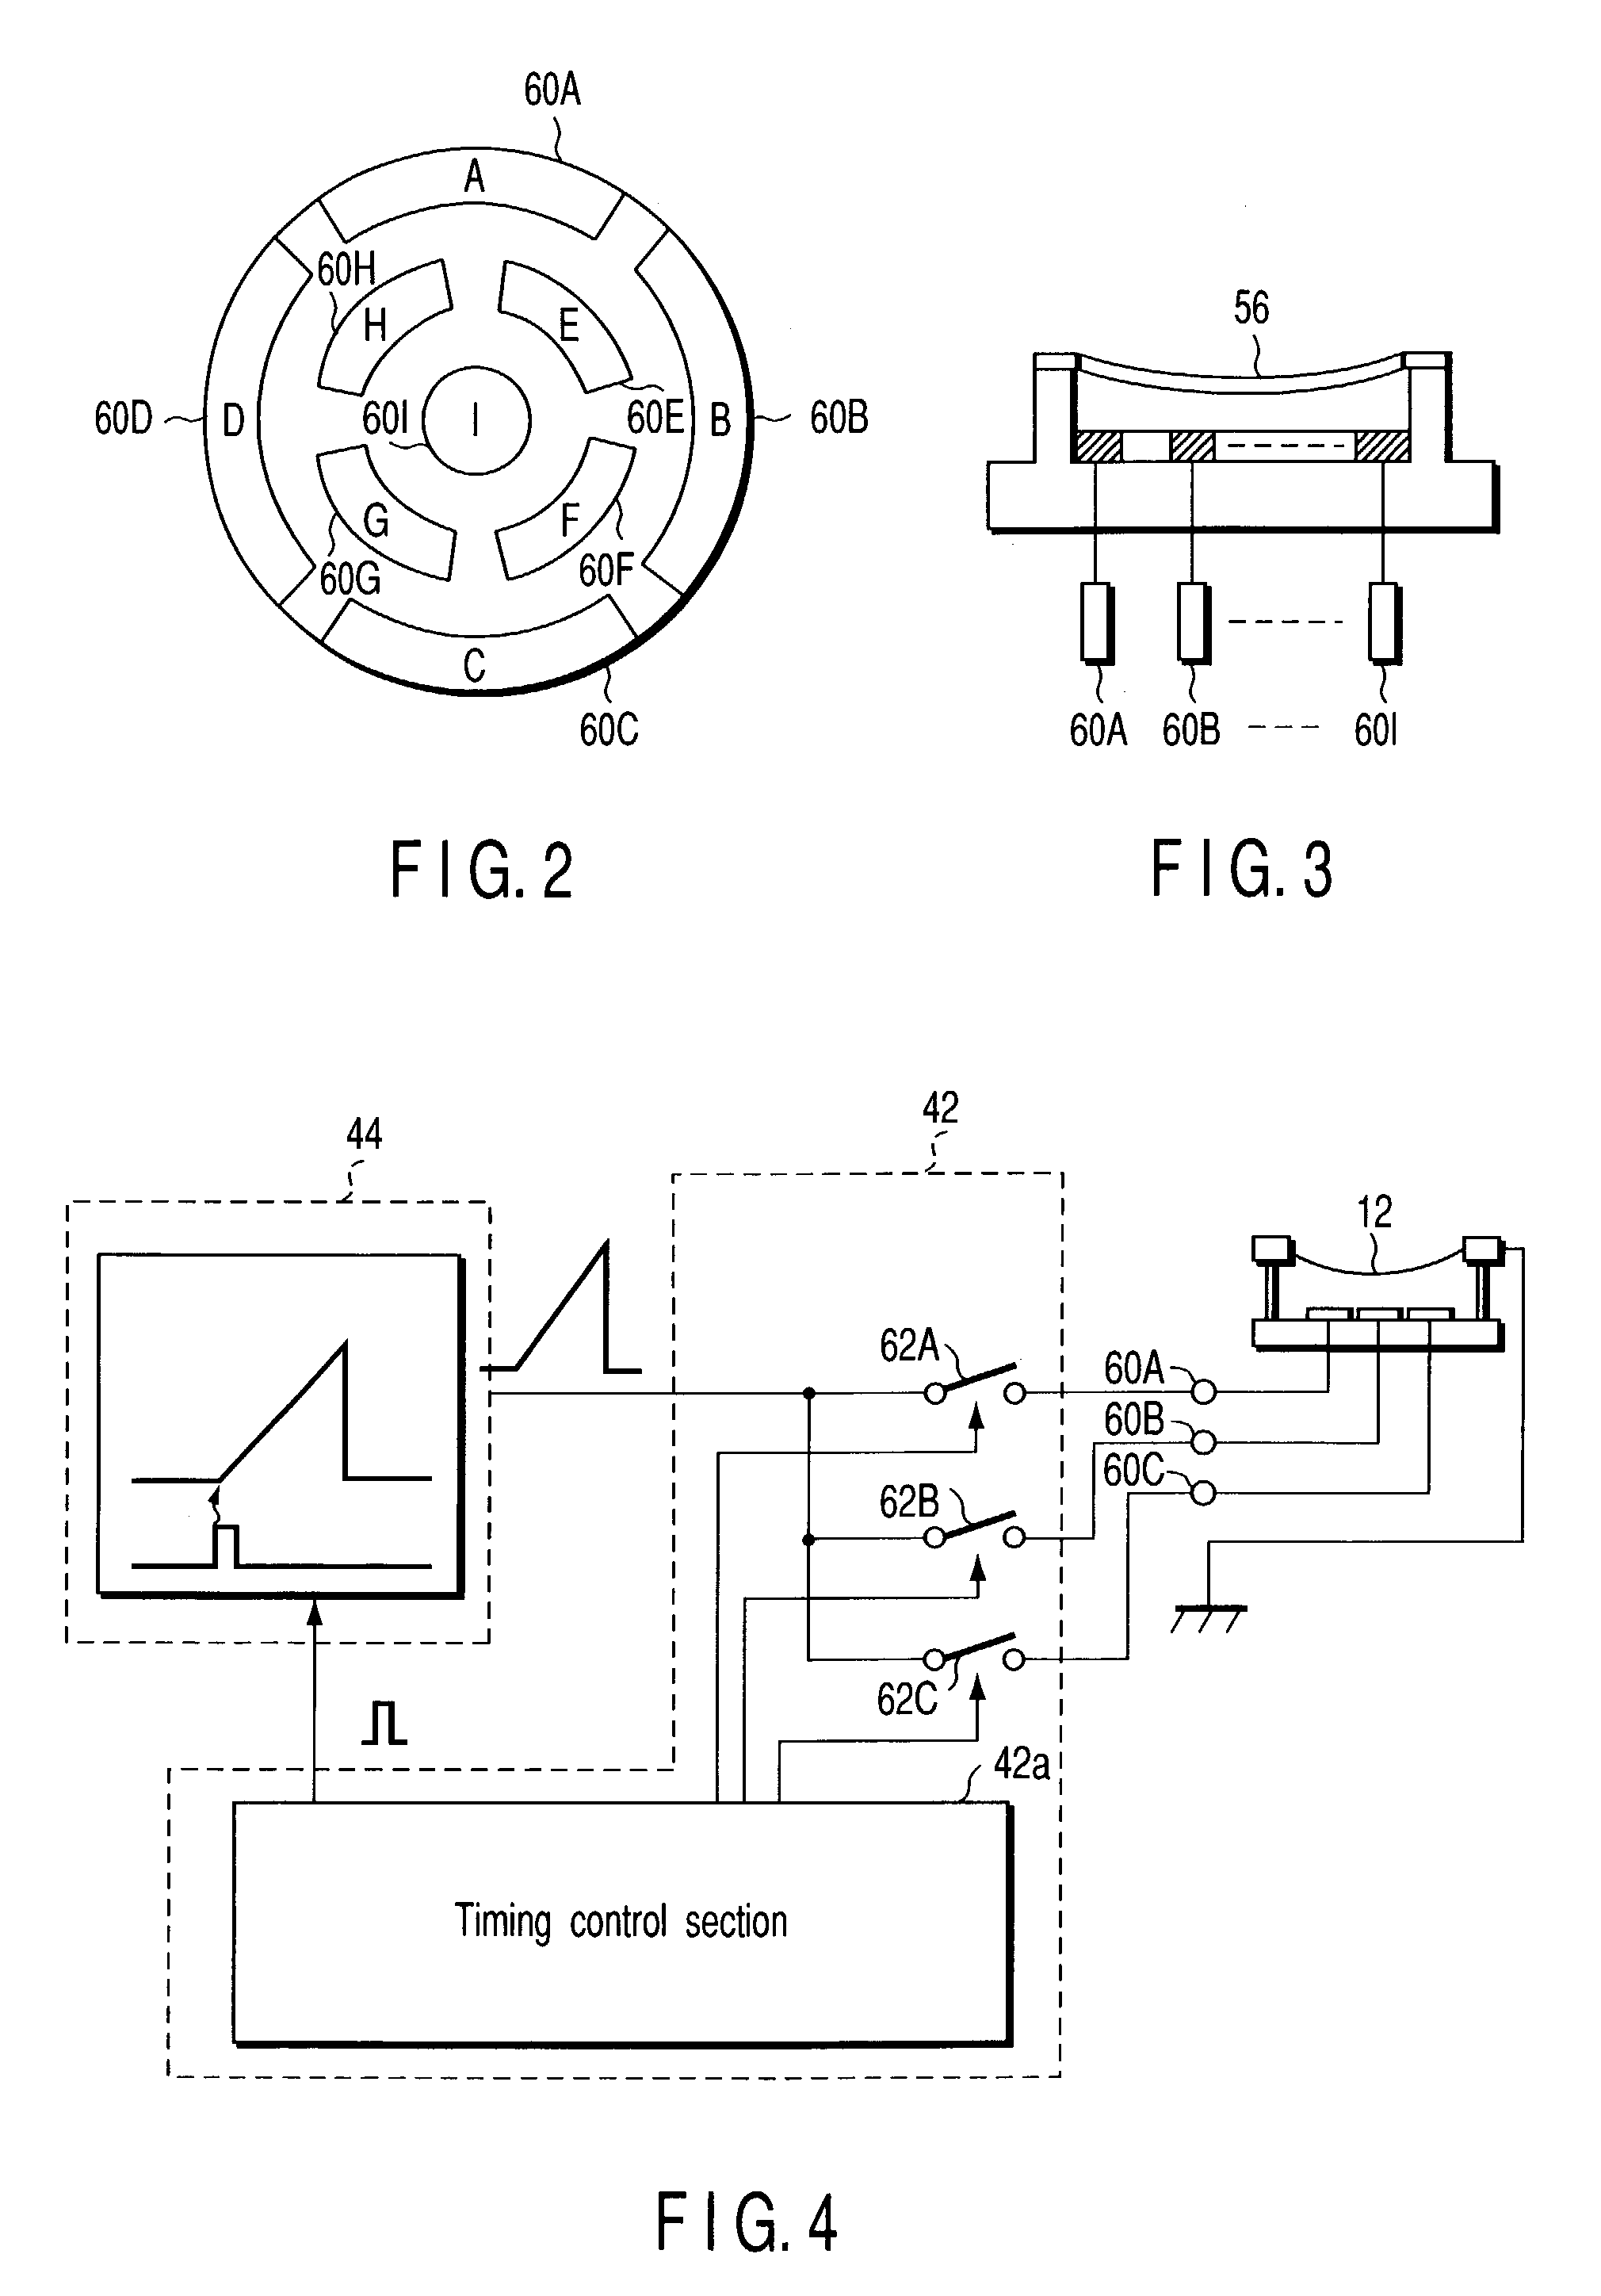 Power supply apparatus and actuator control apparatus